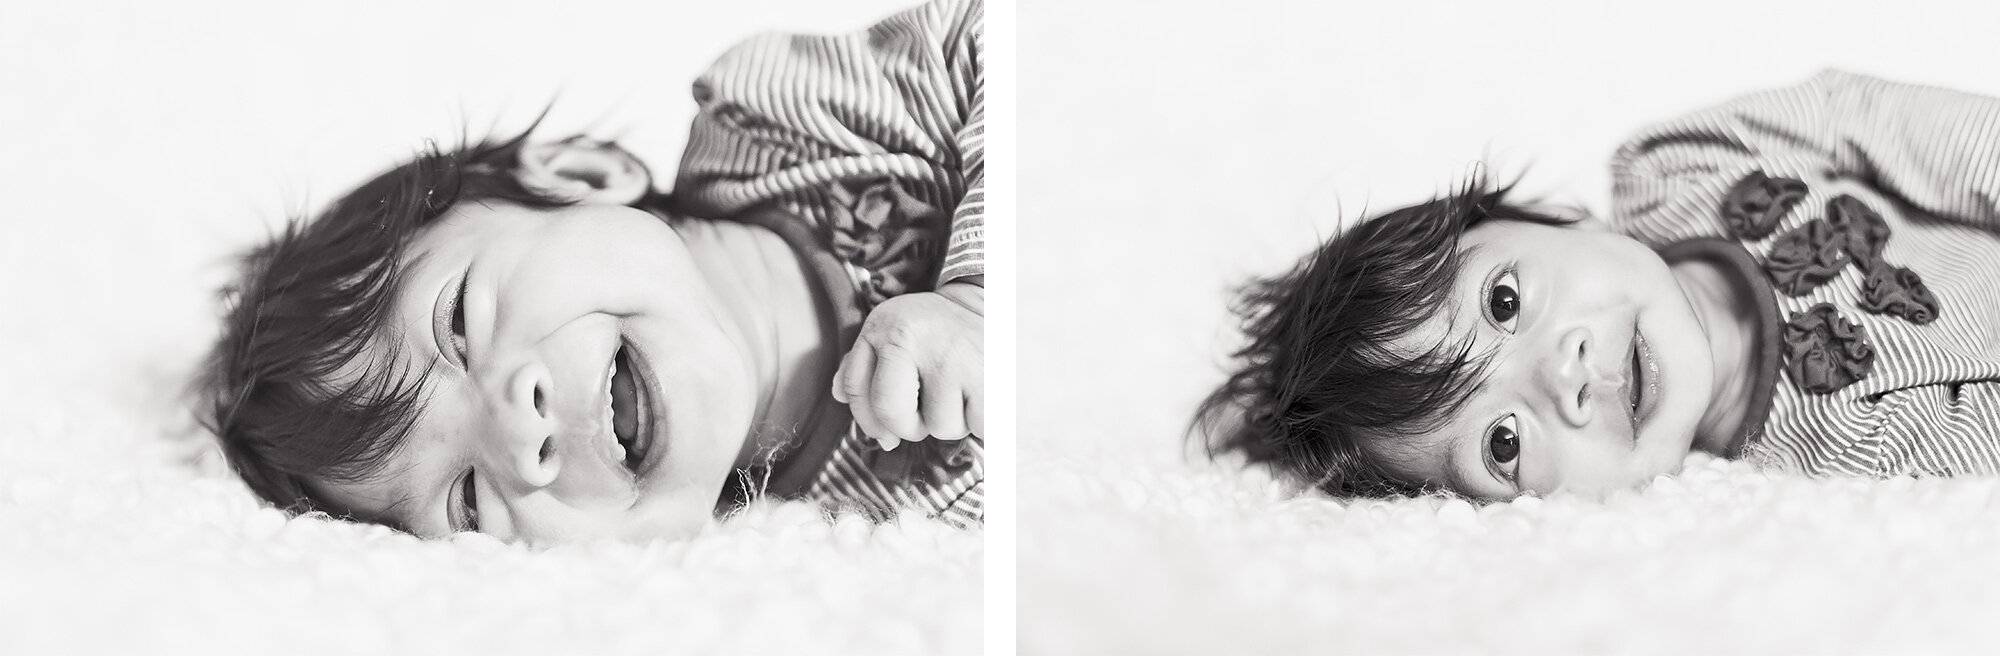 Boston Newborn Portrait Photographer - Stephen Grant Photography 